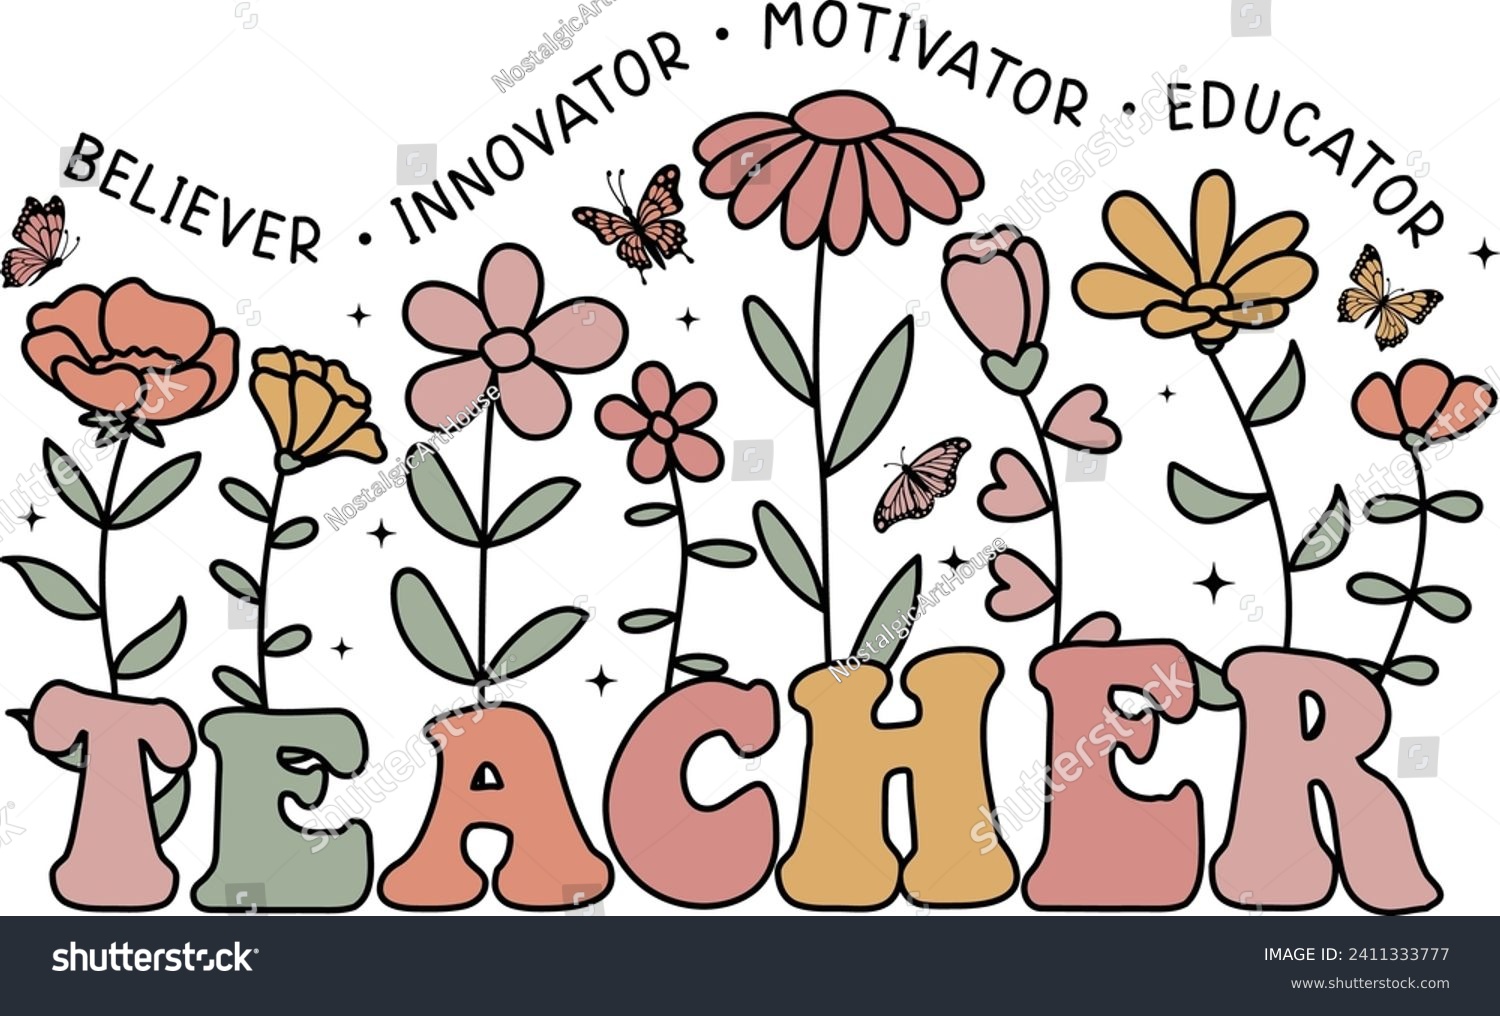 SVG of Believer Innovator Motivator Educator, Teacher, Wildflowers, Teacher life, Back To School. svg